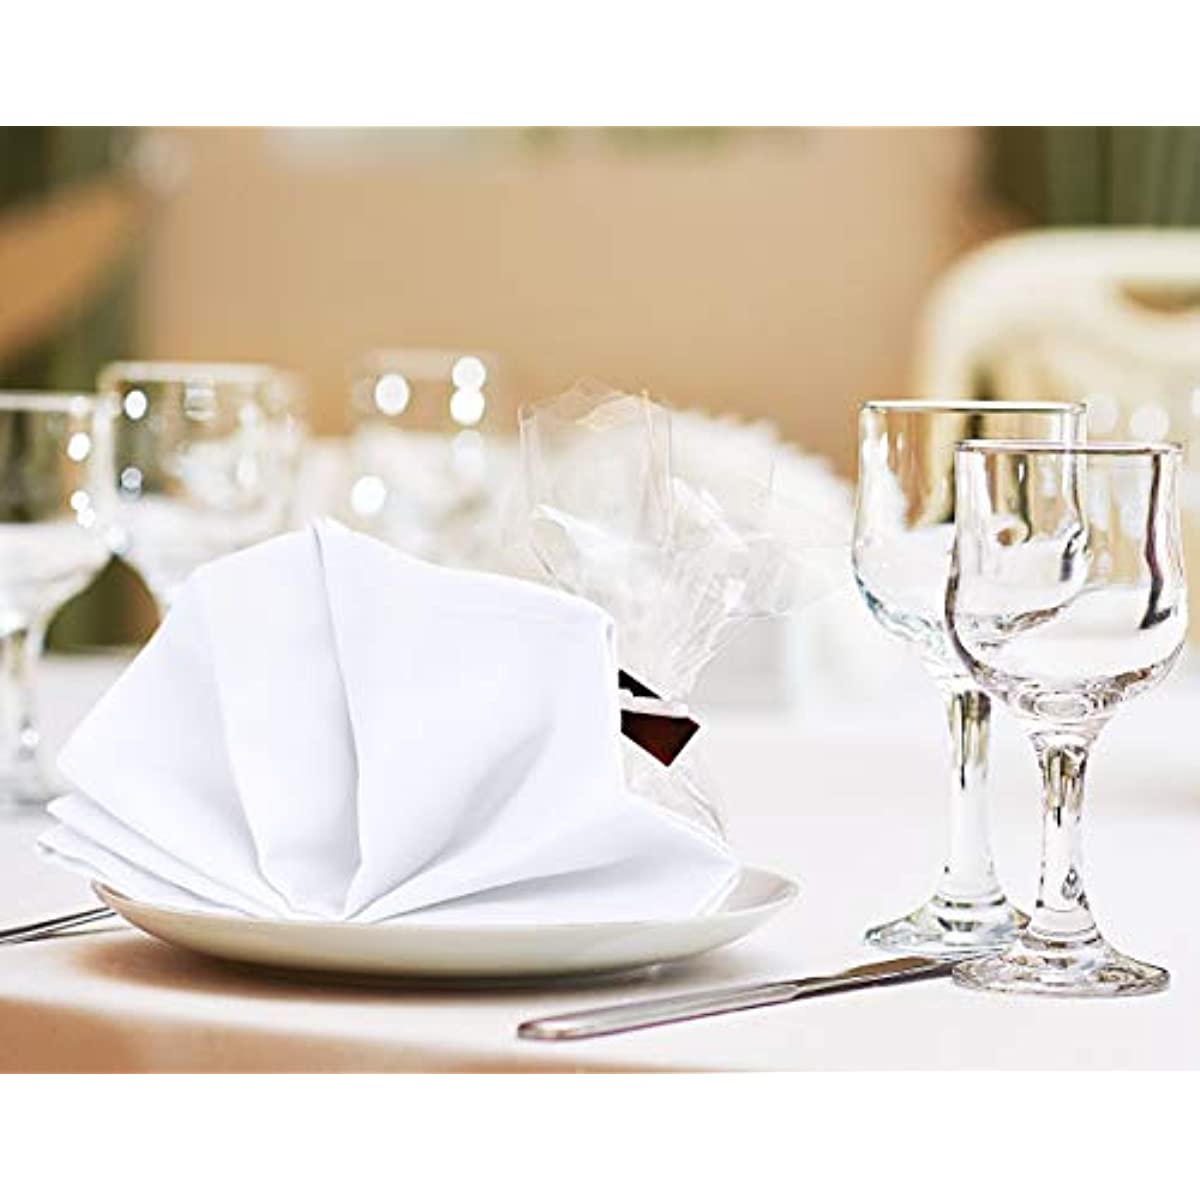  Cloth Napkins, Cotton Napkins, Dinner Napkins Washable, Absorbent Reusable Napkins for Hotel, Lunch, Restaurant, Weddings, Parties